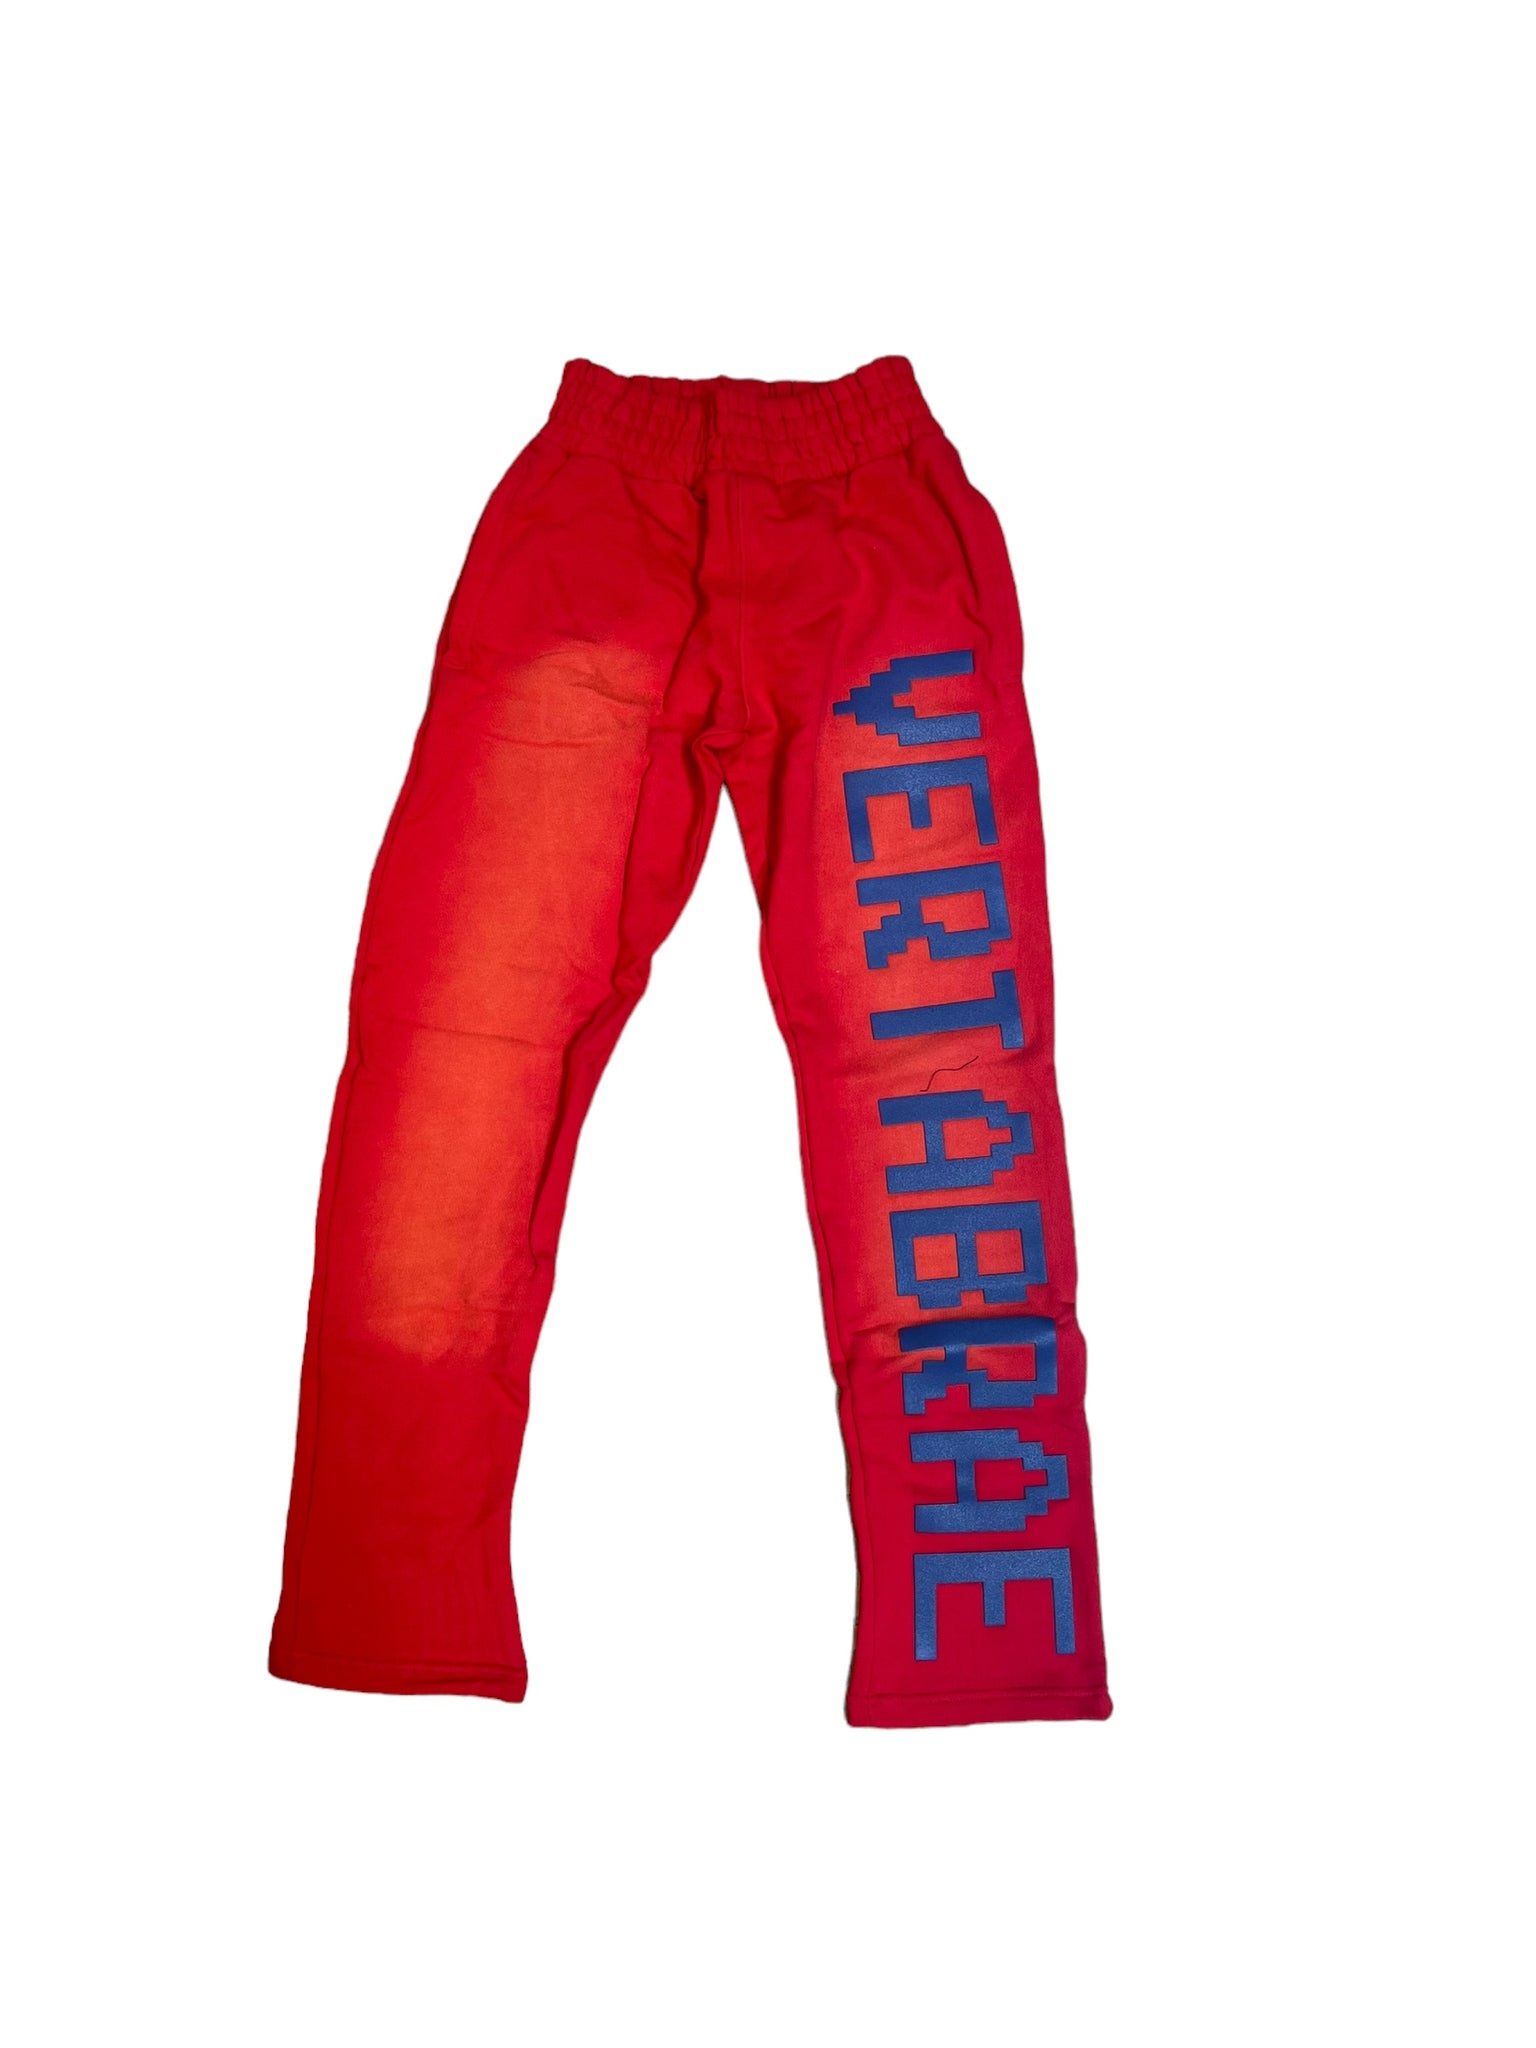 Vertabrae Single Leg Sweatpants "Red/Blue"